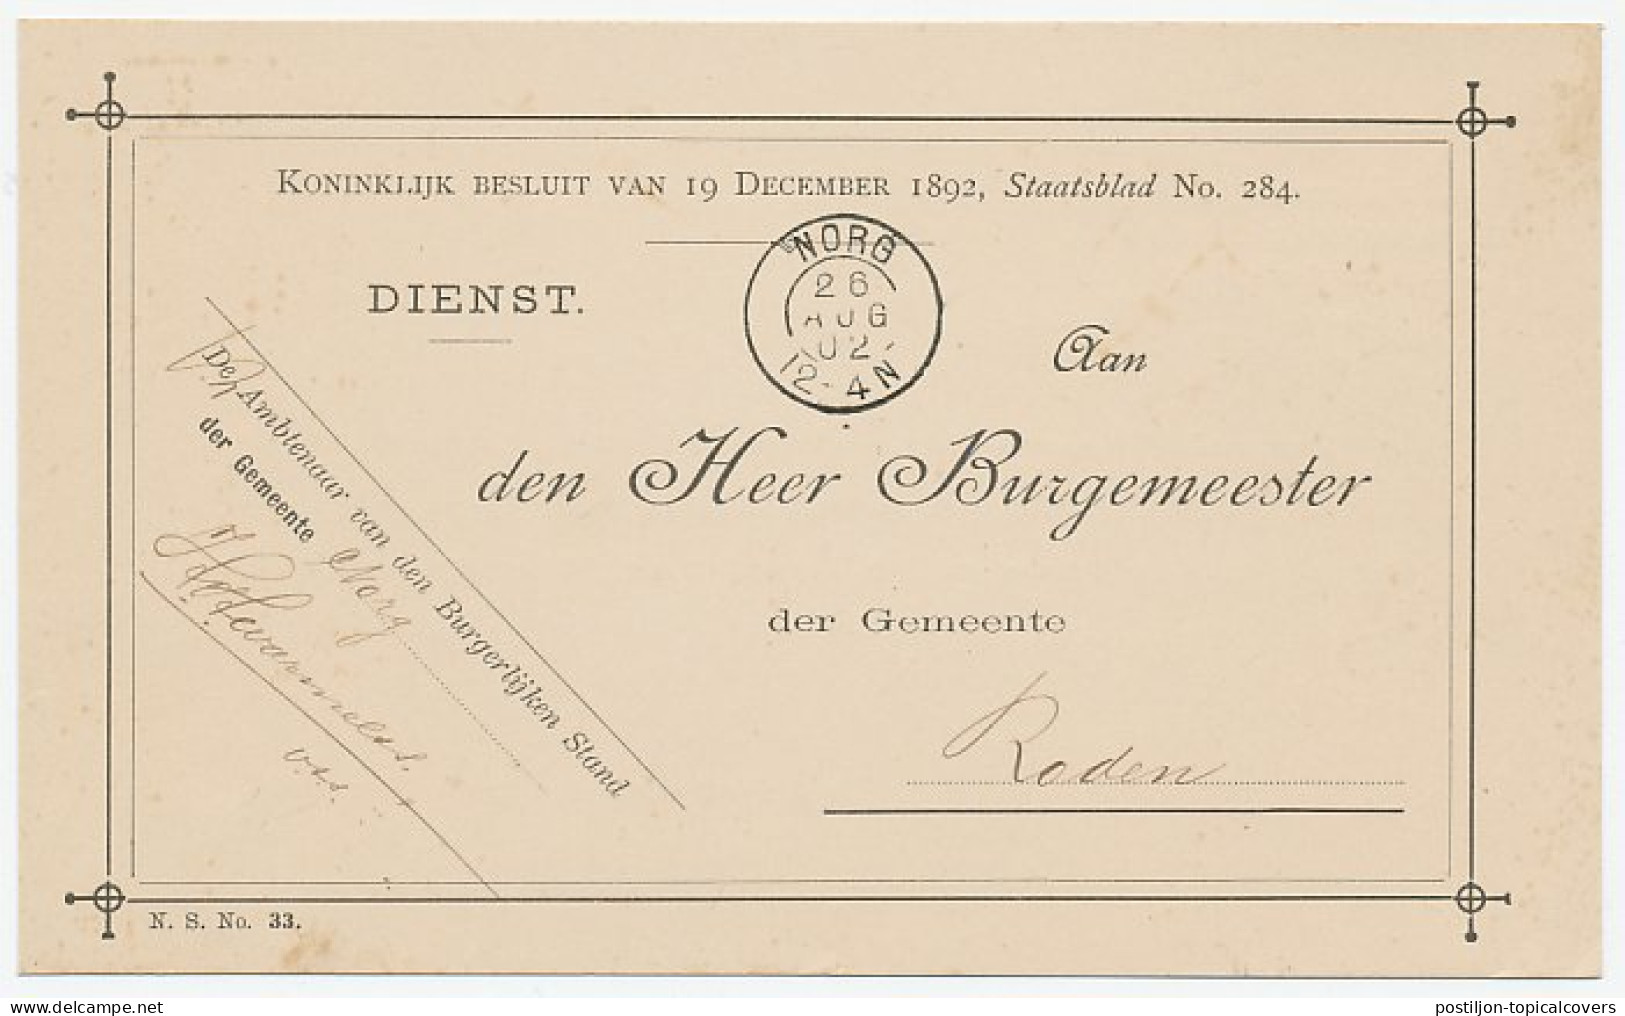 Kleinrondstempel Norg 1902 - Unclassified